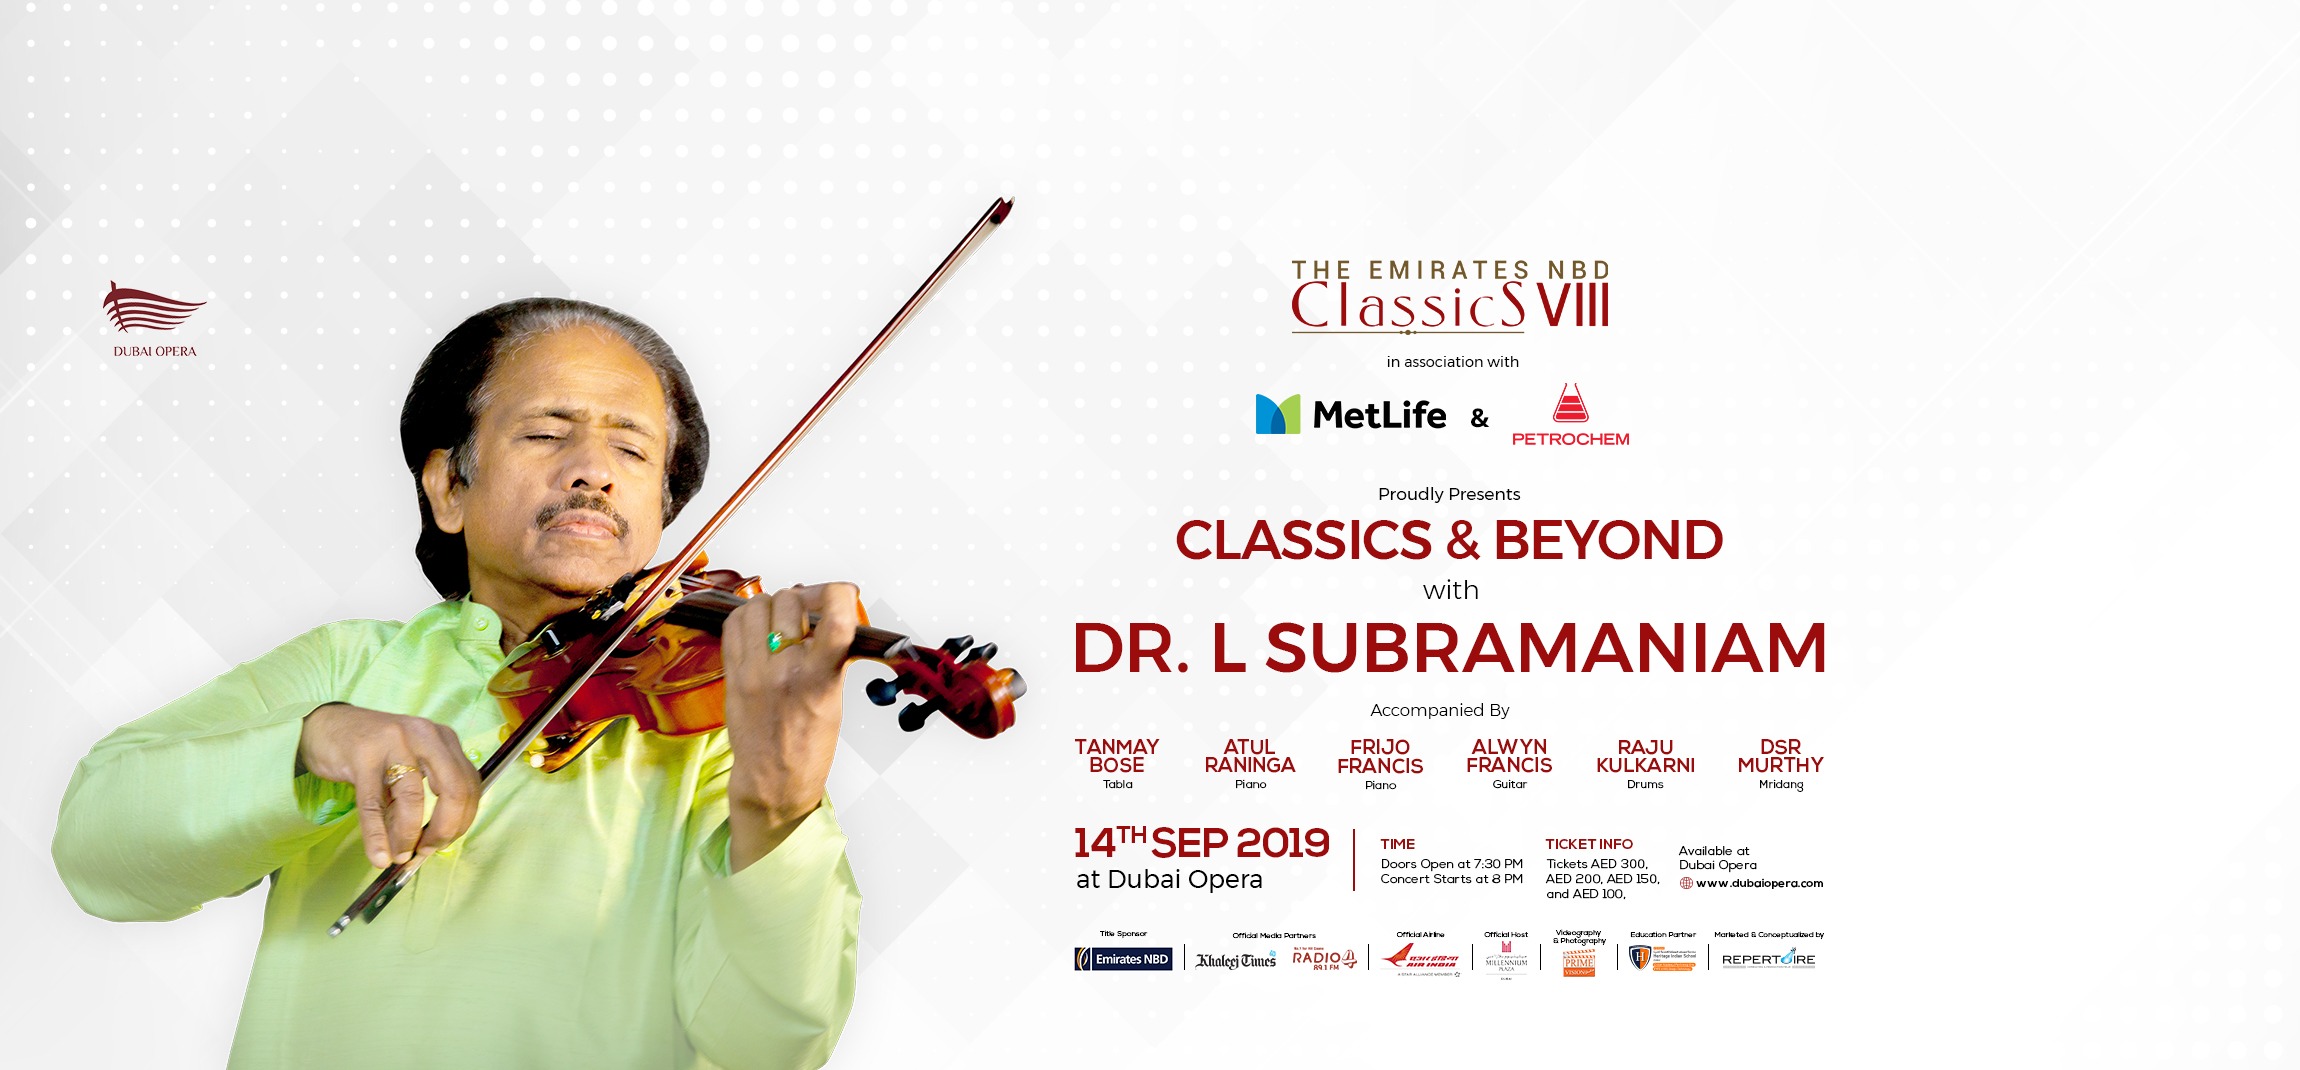 Dr. L Subramaniam Concert at Dubai Opera - Coming Soon in UAE